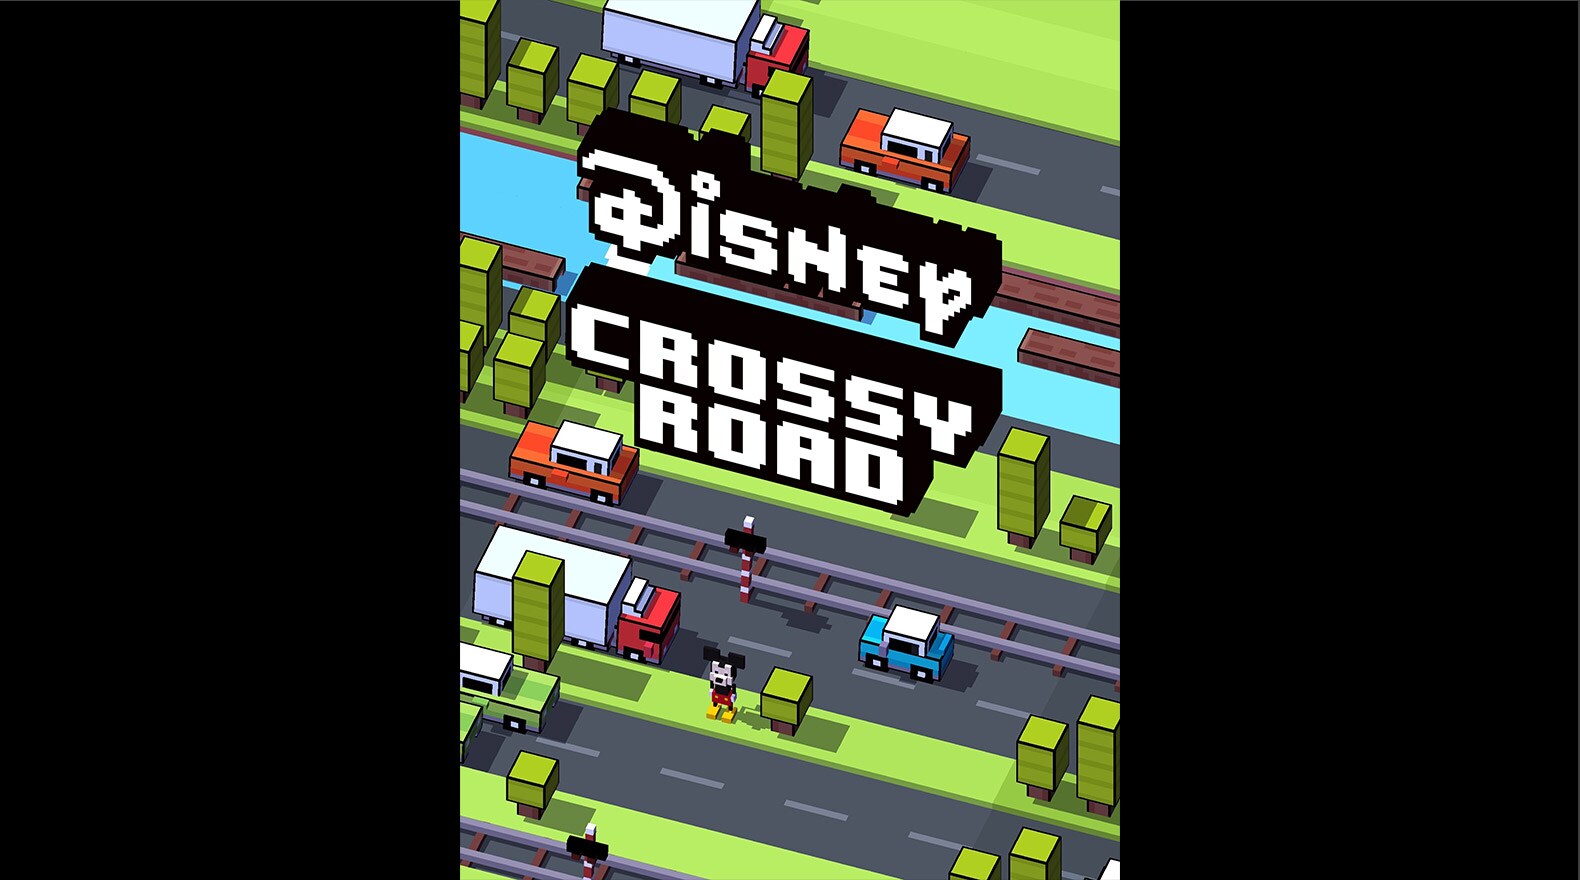 disney crossy road download